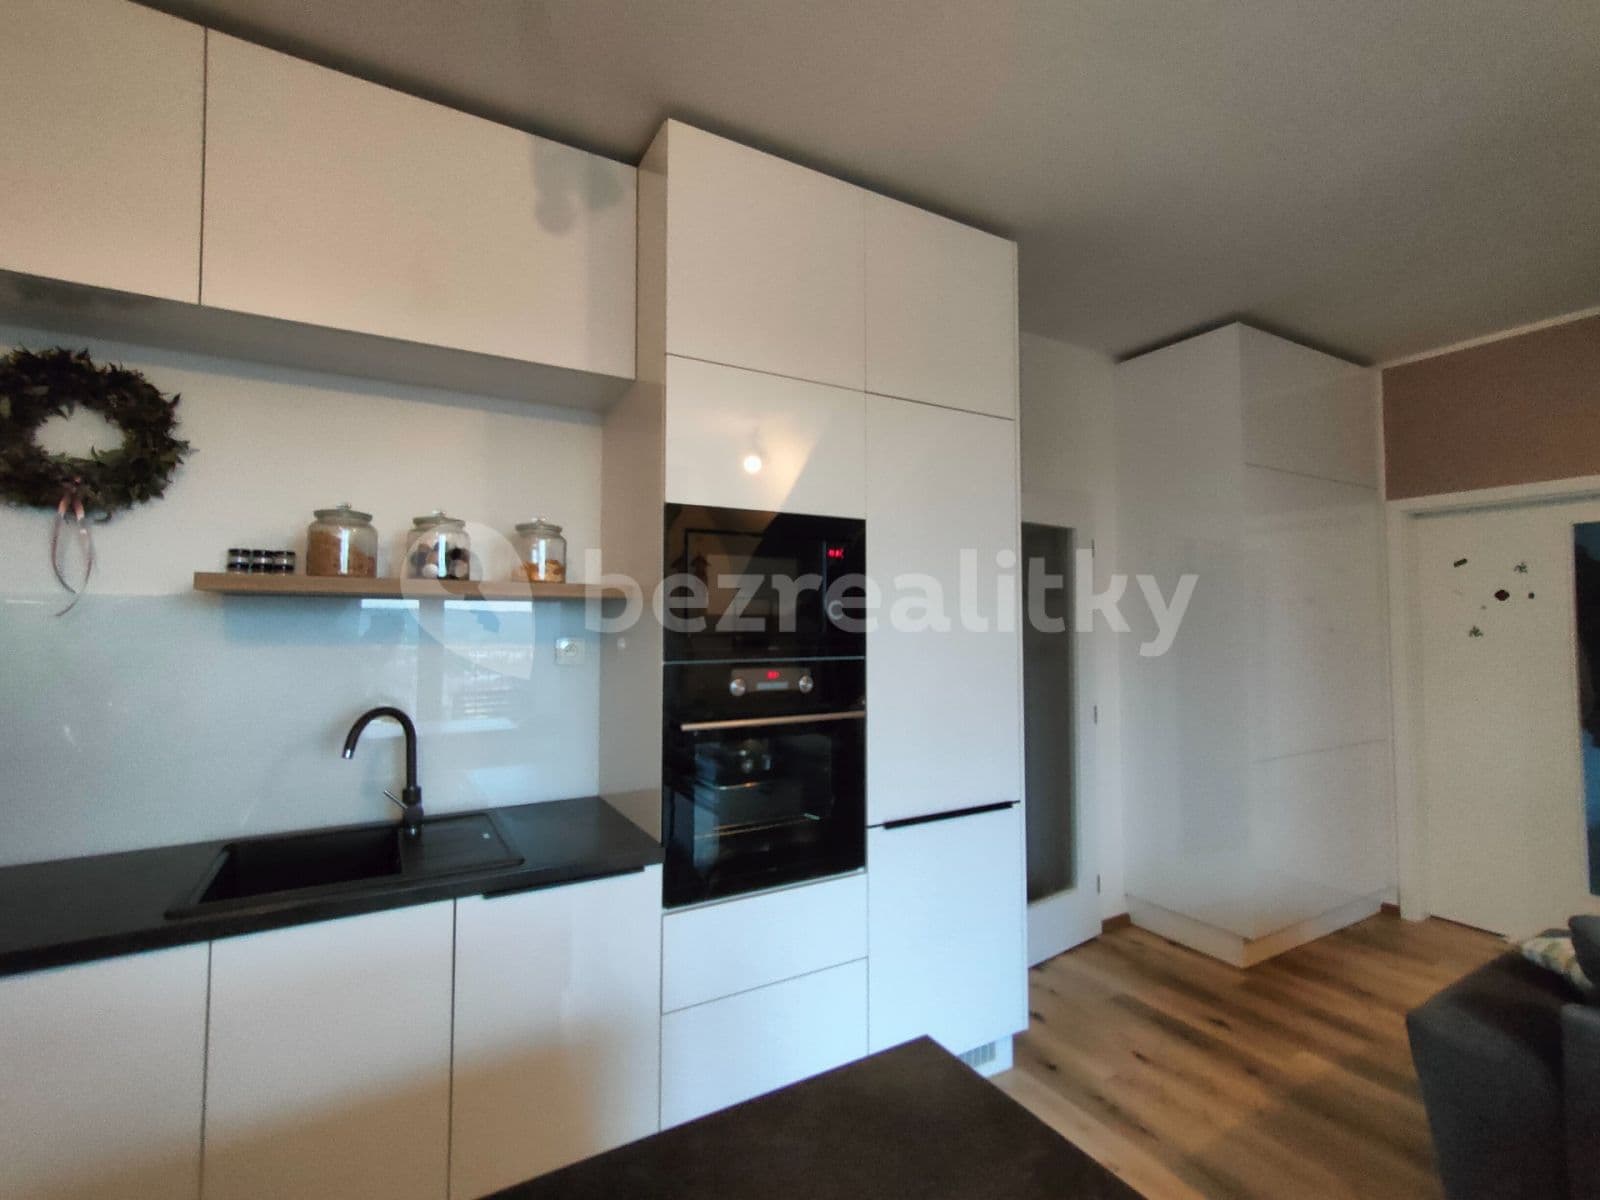 2 bedroom with open-plan kitchen flat to rent, 64 m², Holubice, Jihomoravský Region